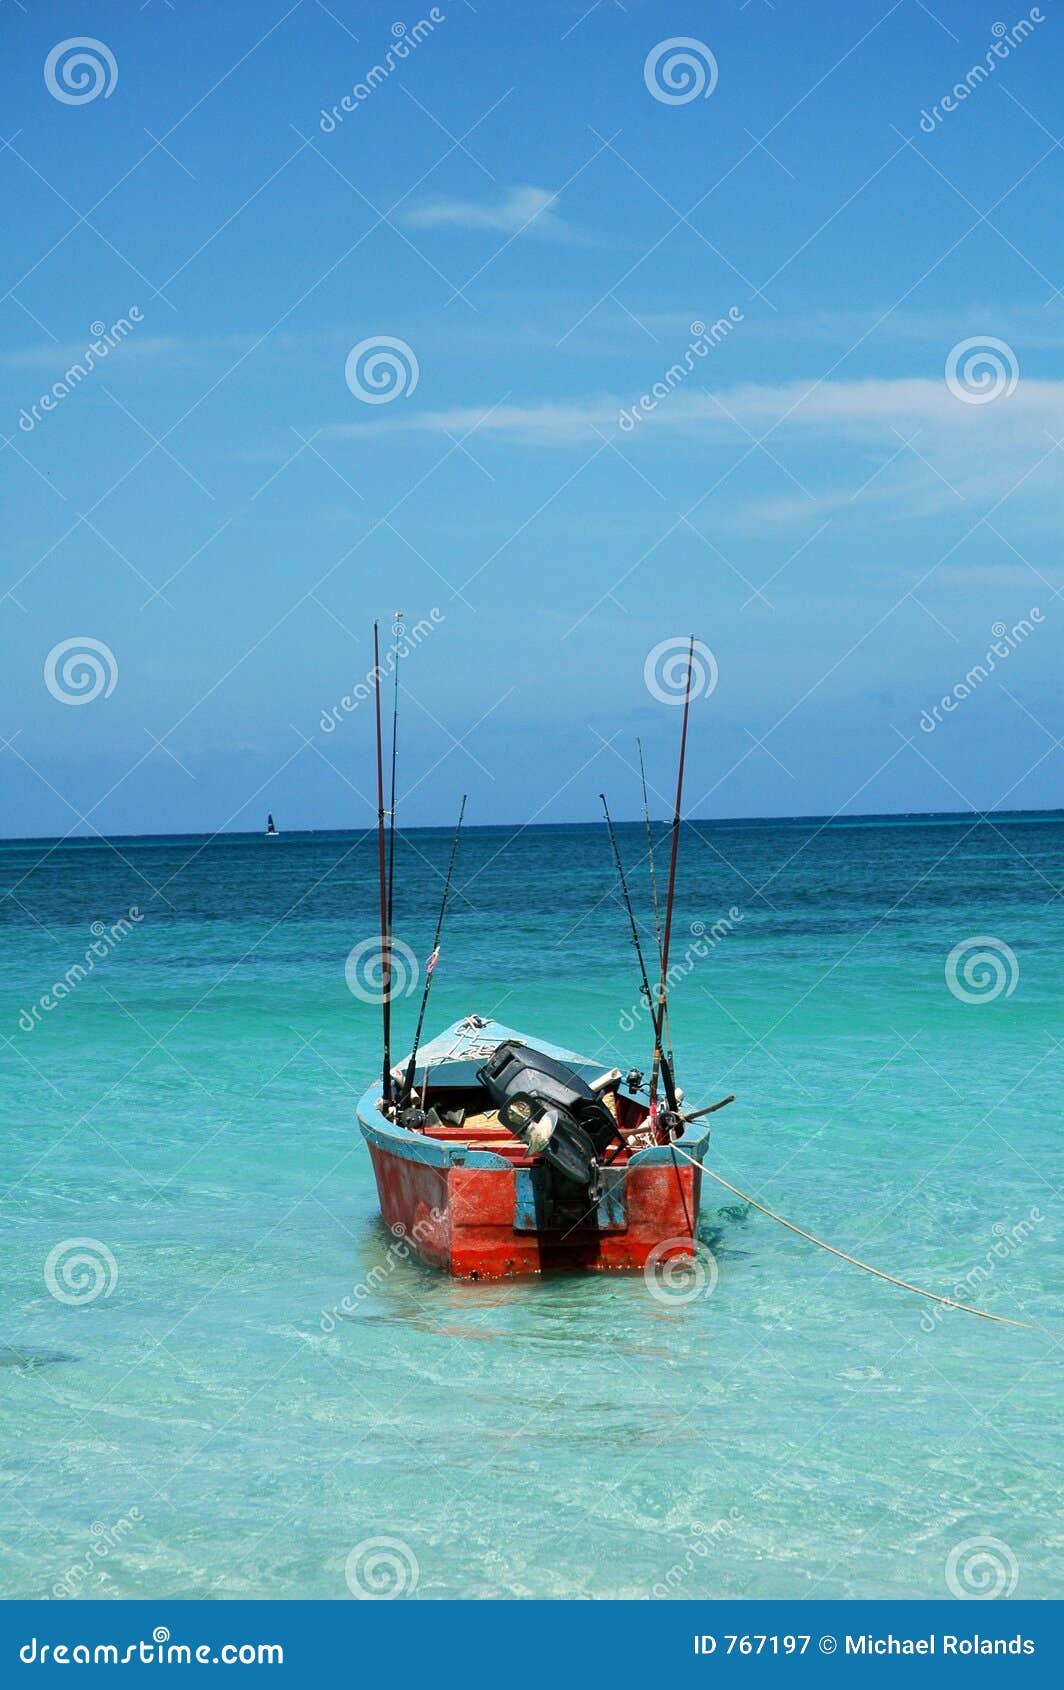 Jamaican fishing boat stock image. Image of travel, ocean